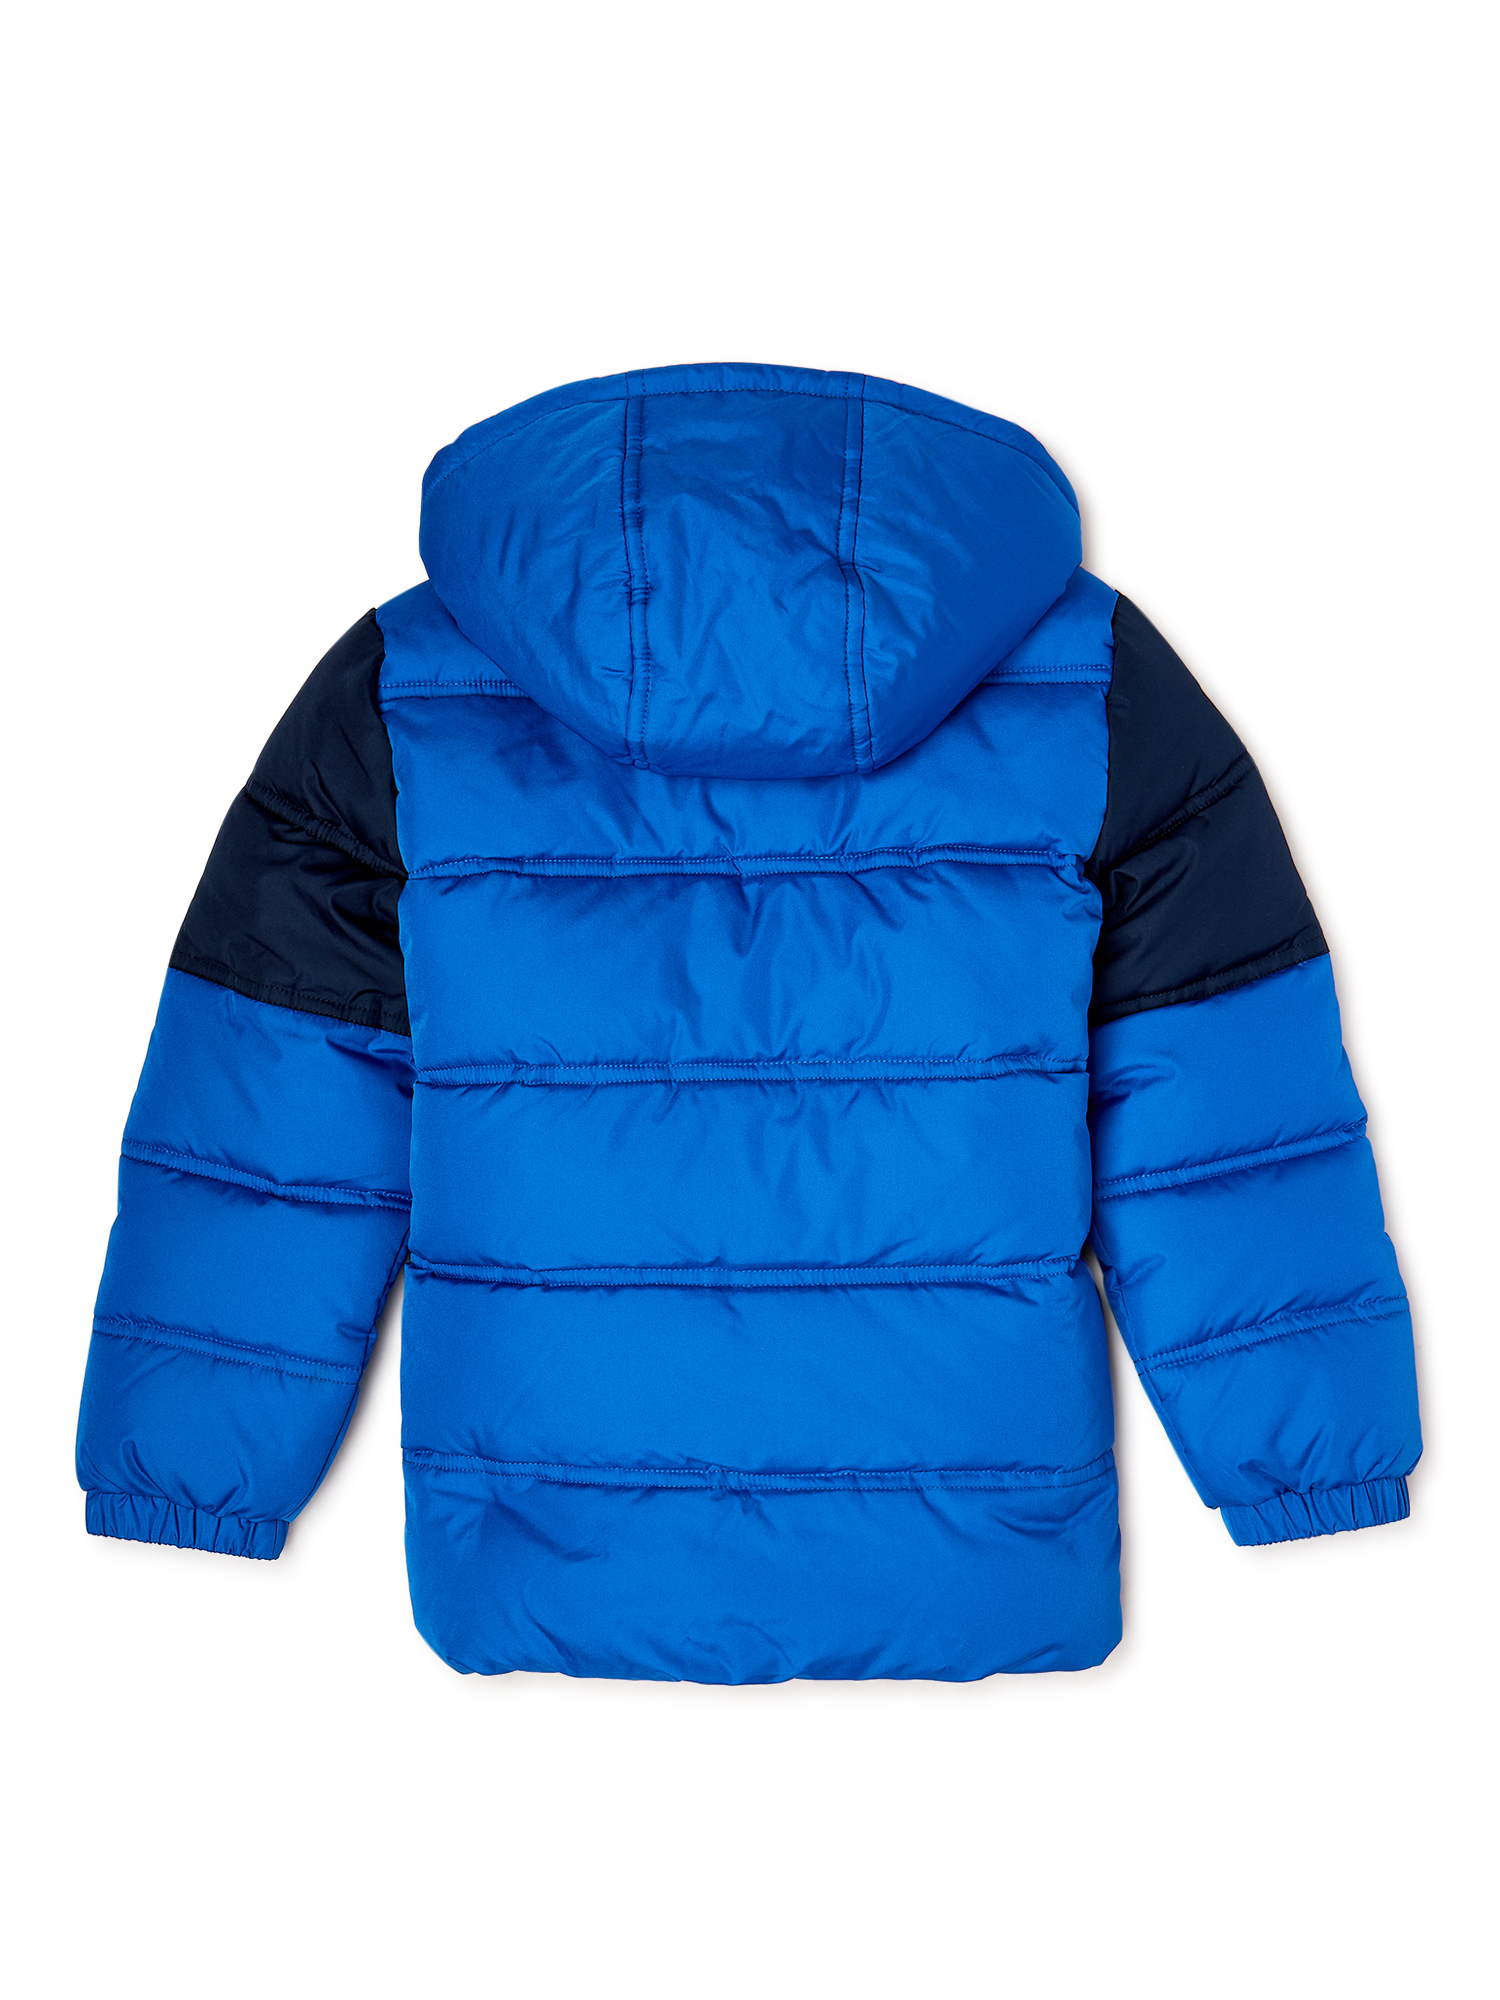 iXtreme Boys Colorblock Puffer Jacket, Sizes 4-18 - image 2 of 3